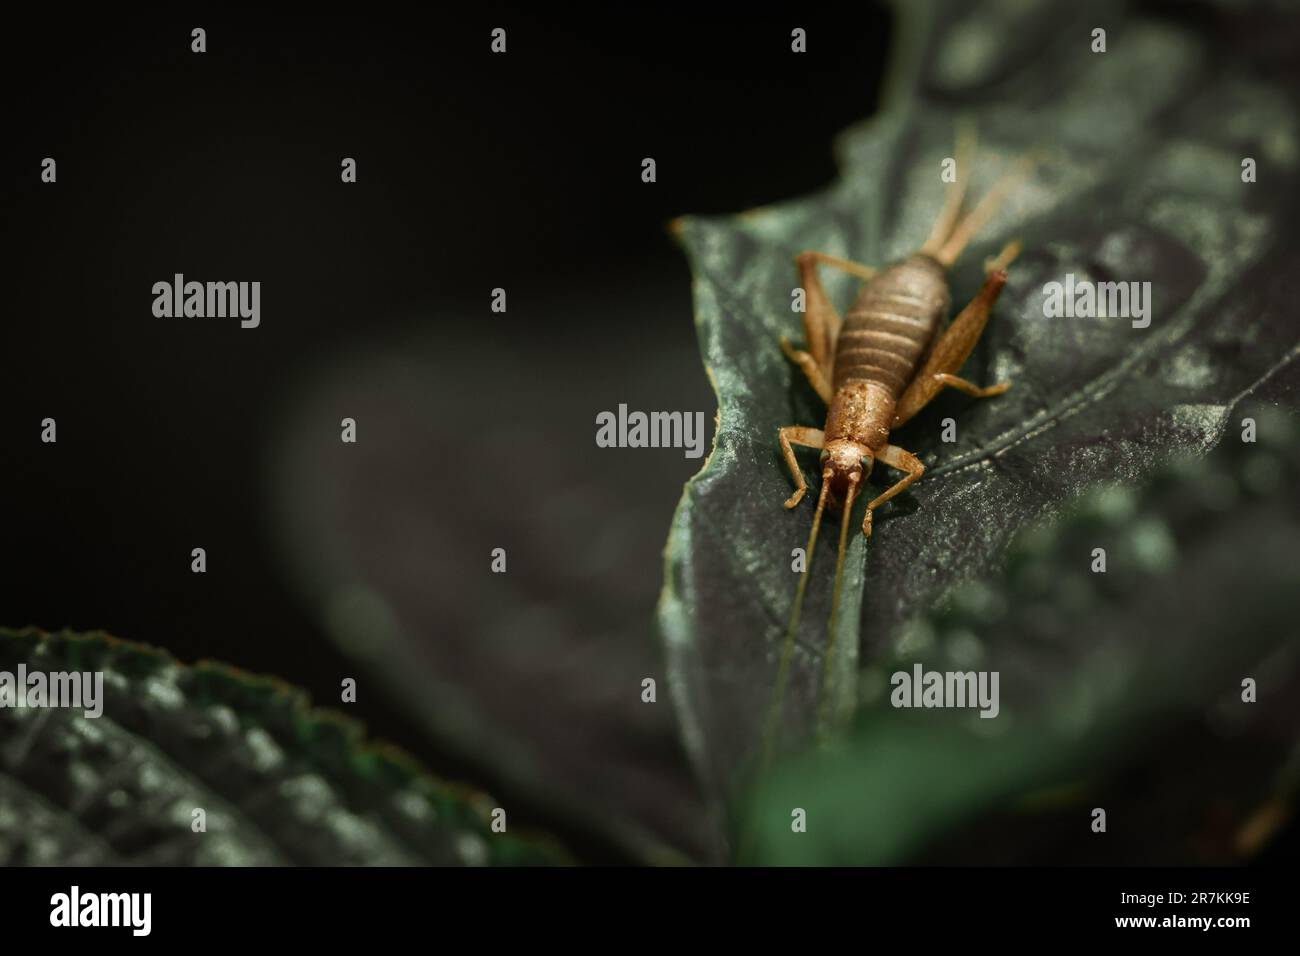 A closeup shot of a cricket on a green leaf. Stock Photo